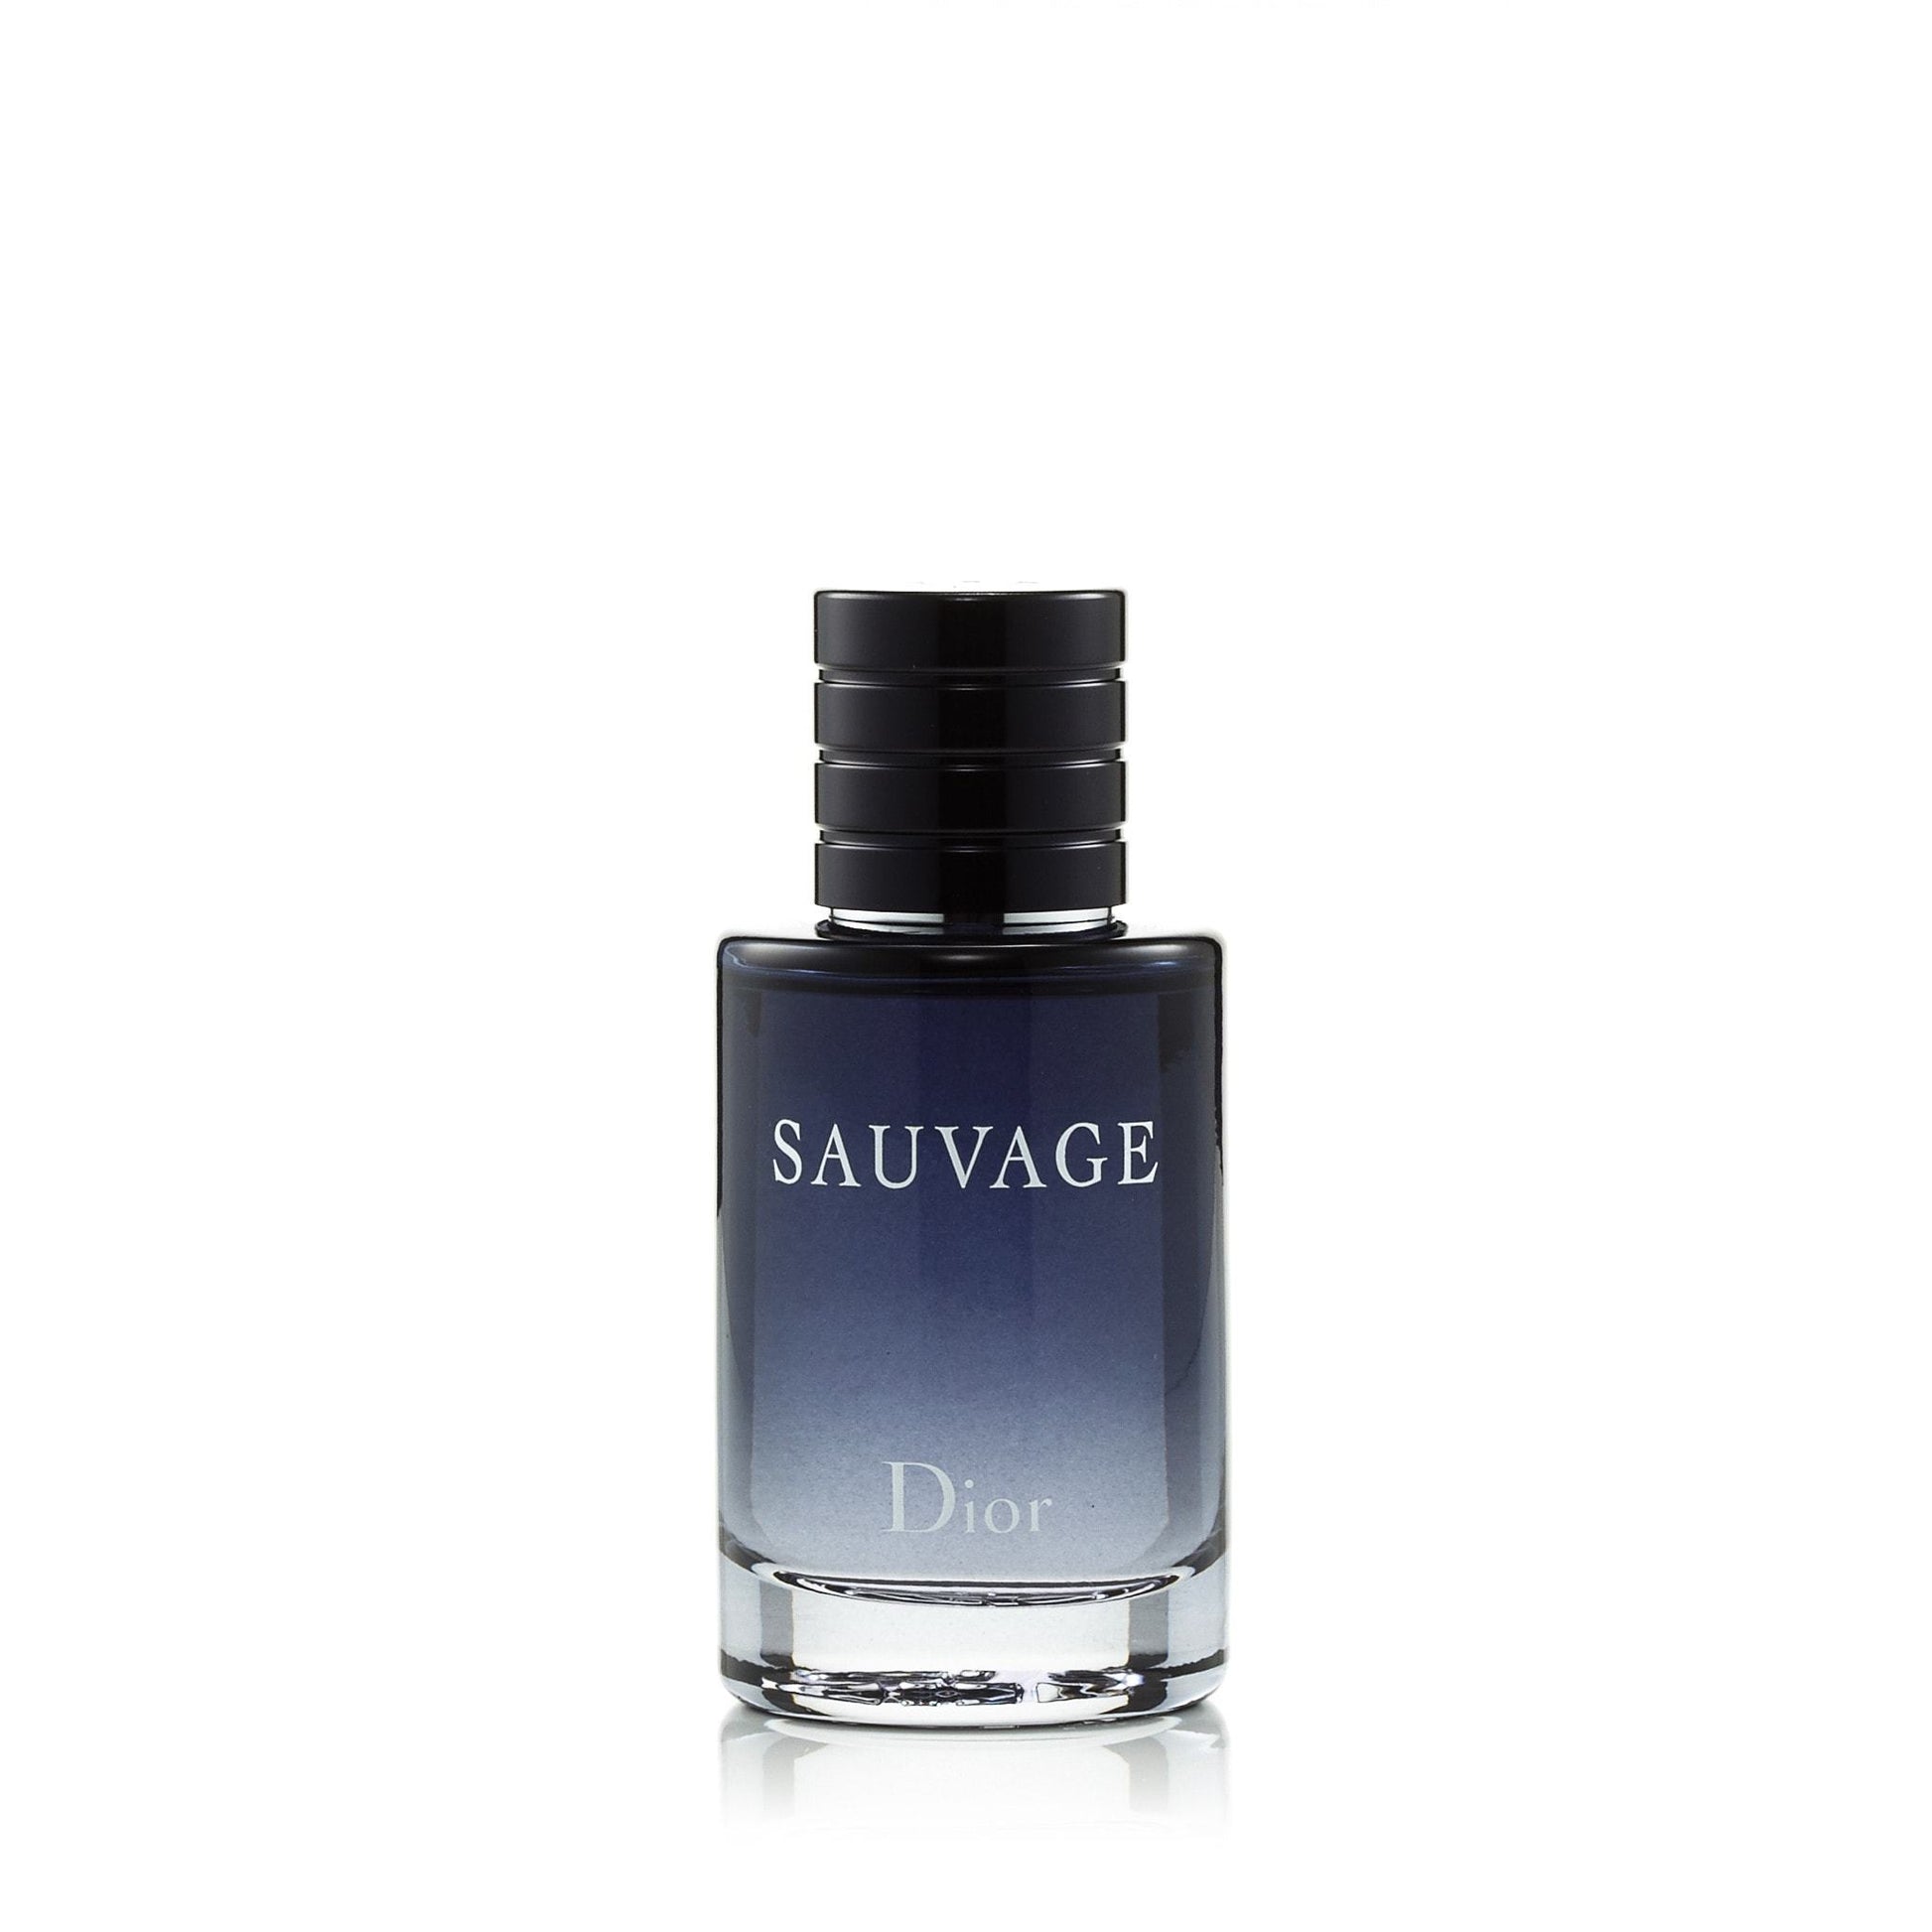 Sauvage Eau de Toilette Spray for Men by Dior, Product image 6